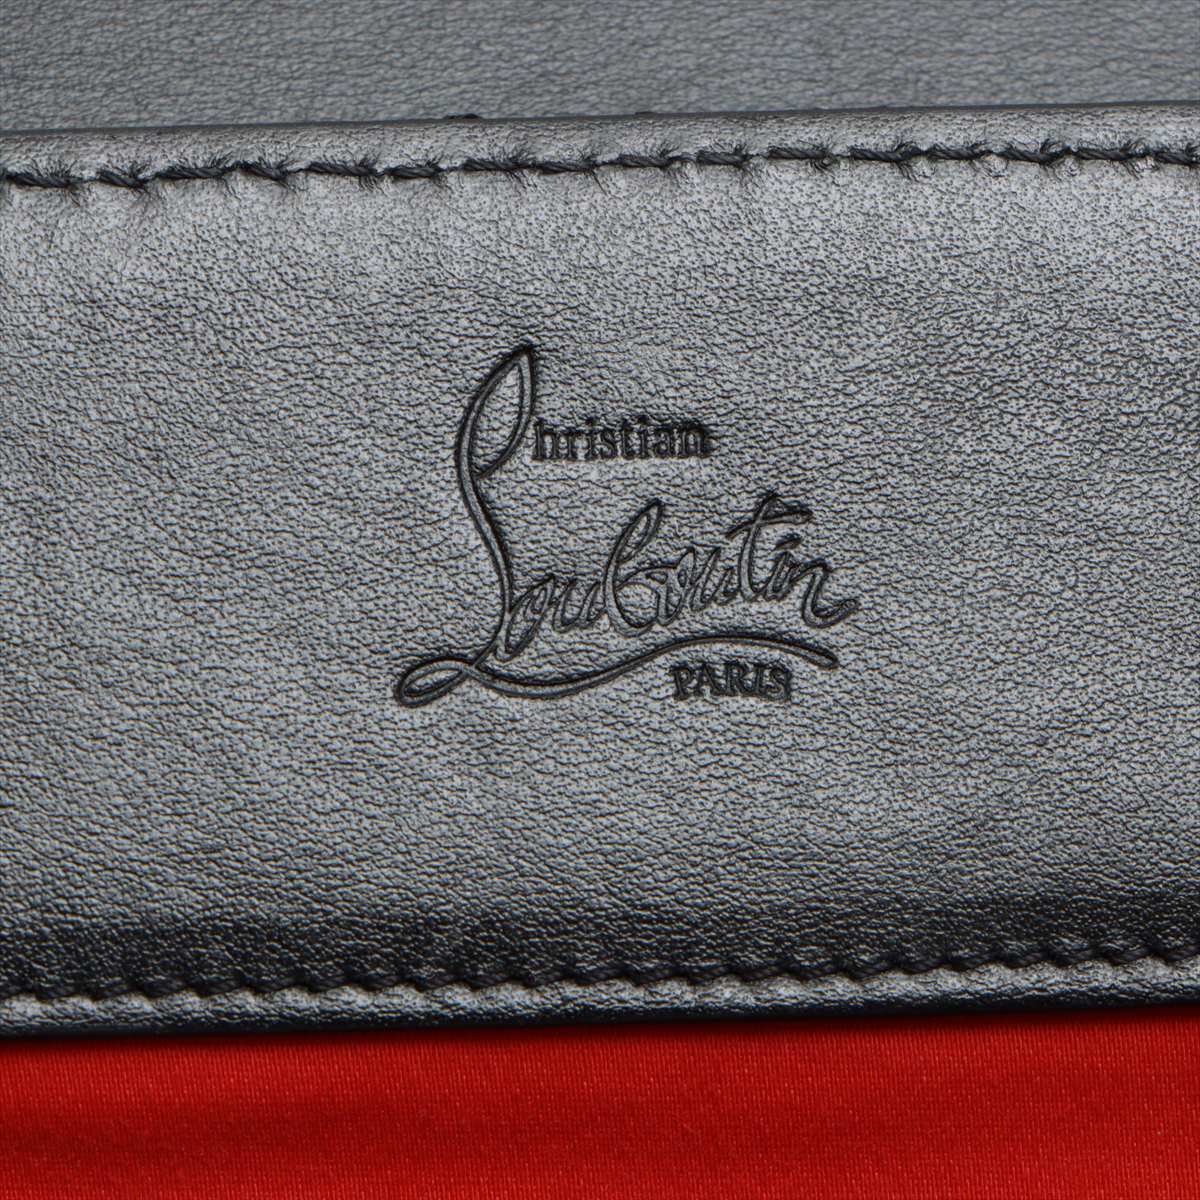 Christian Butterfly Explorers 皮革 x Stalls 雙肩/架 紅色圍欄